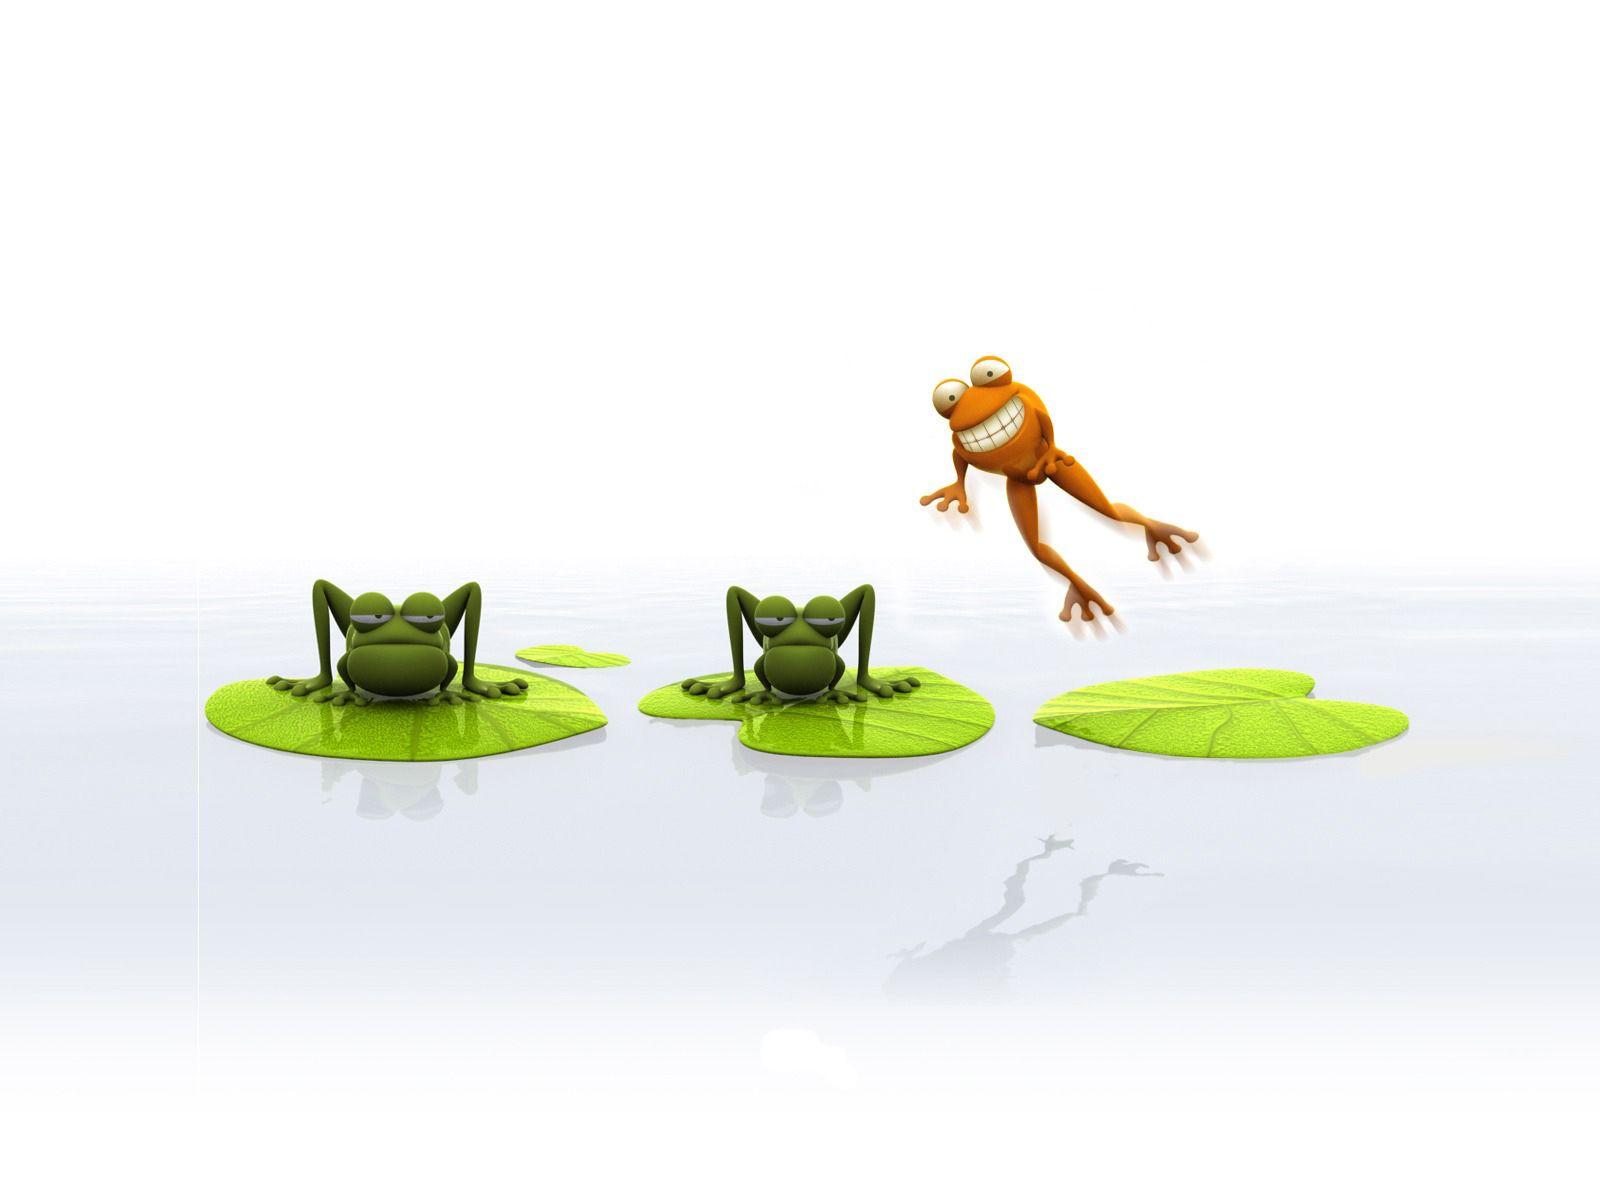 The cartoon frog creativity Wallpaper Animal desktop background